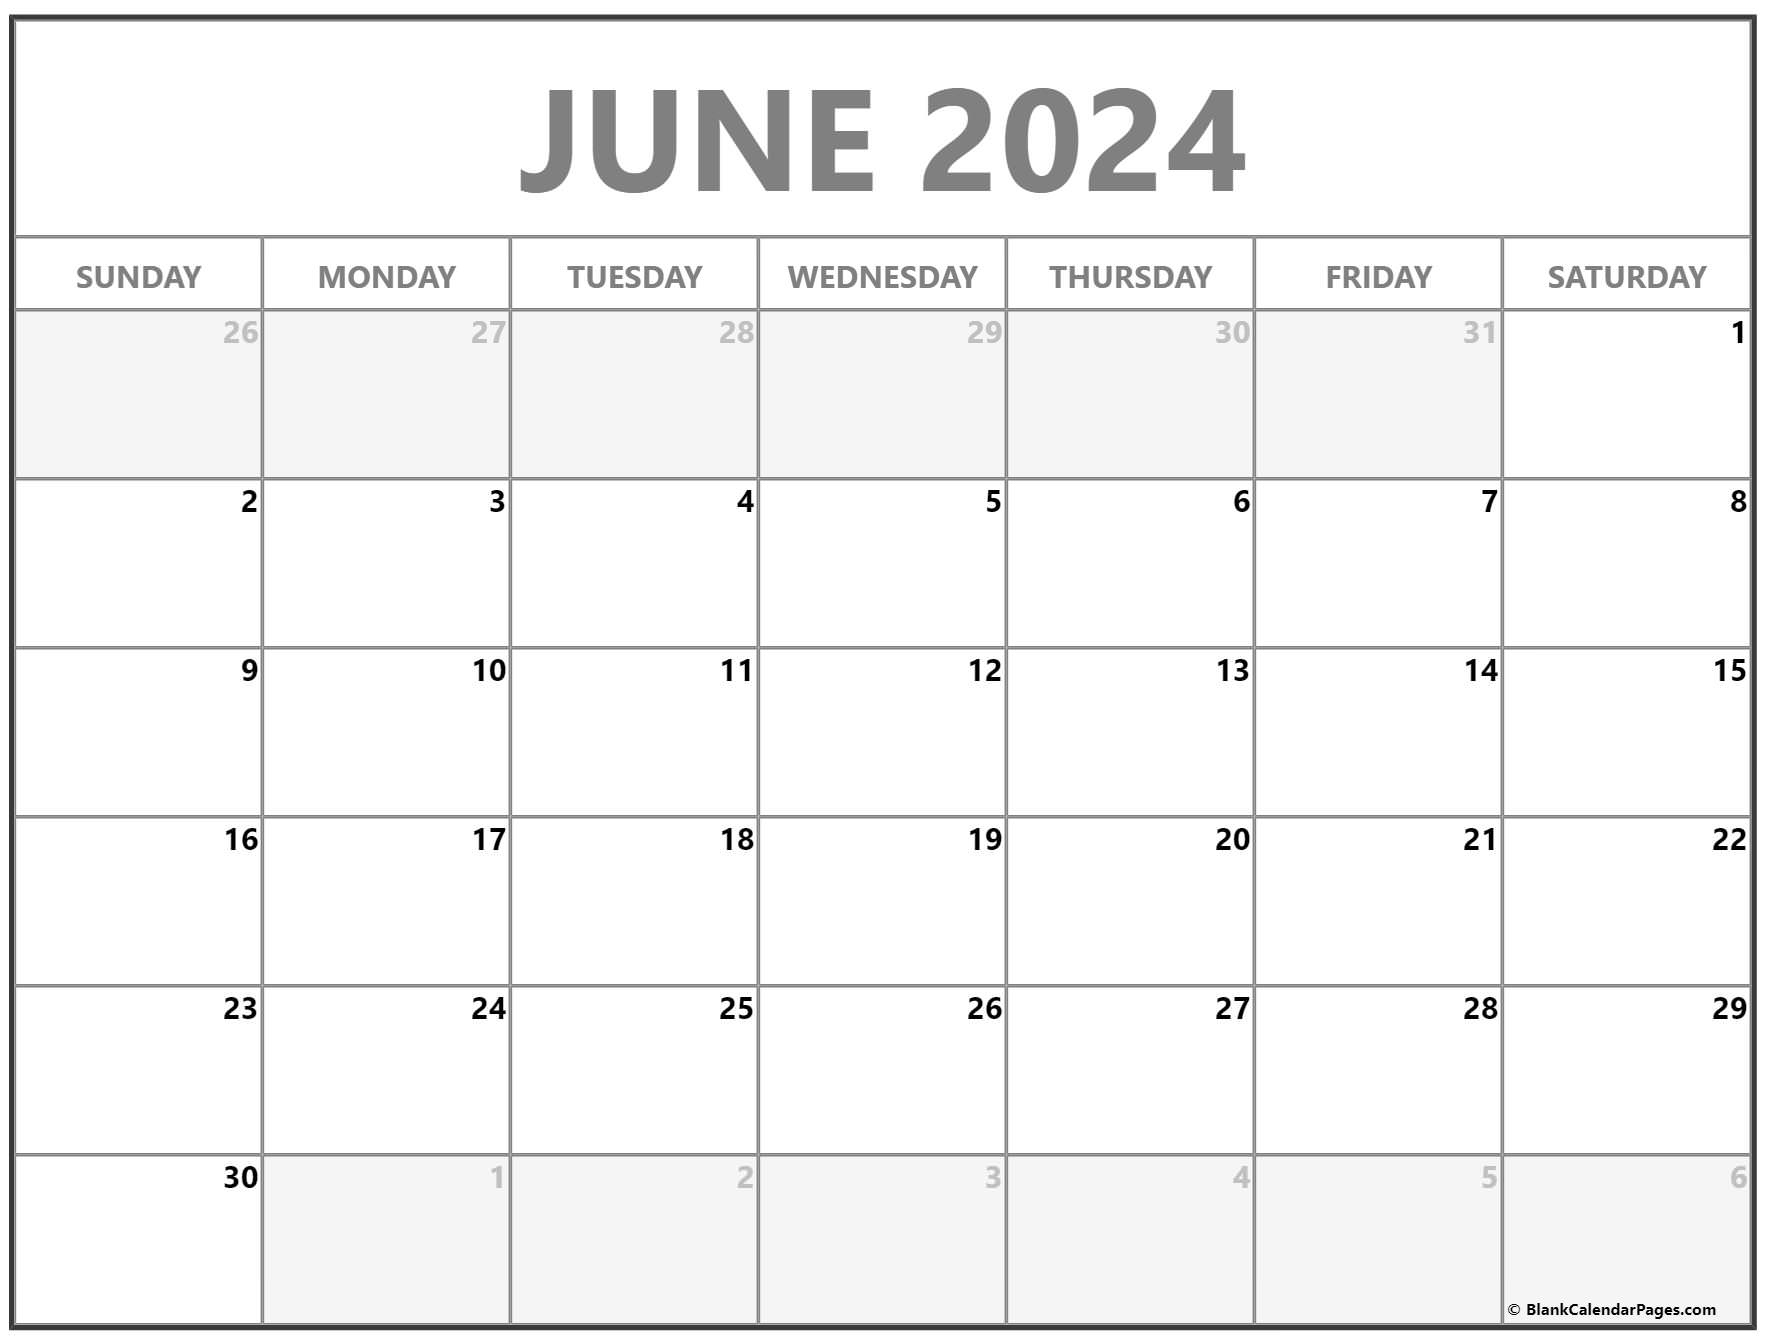 June 2024 Calendar | Free Printable Calendar | Blank Calendar Printable June 2024